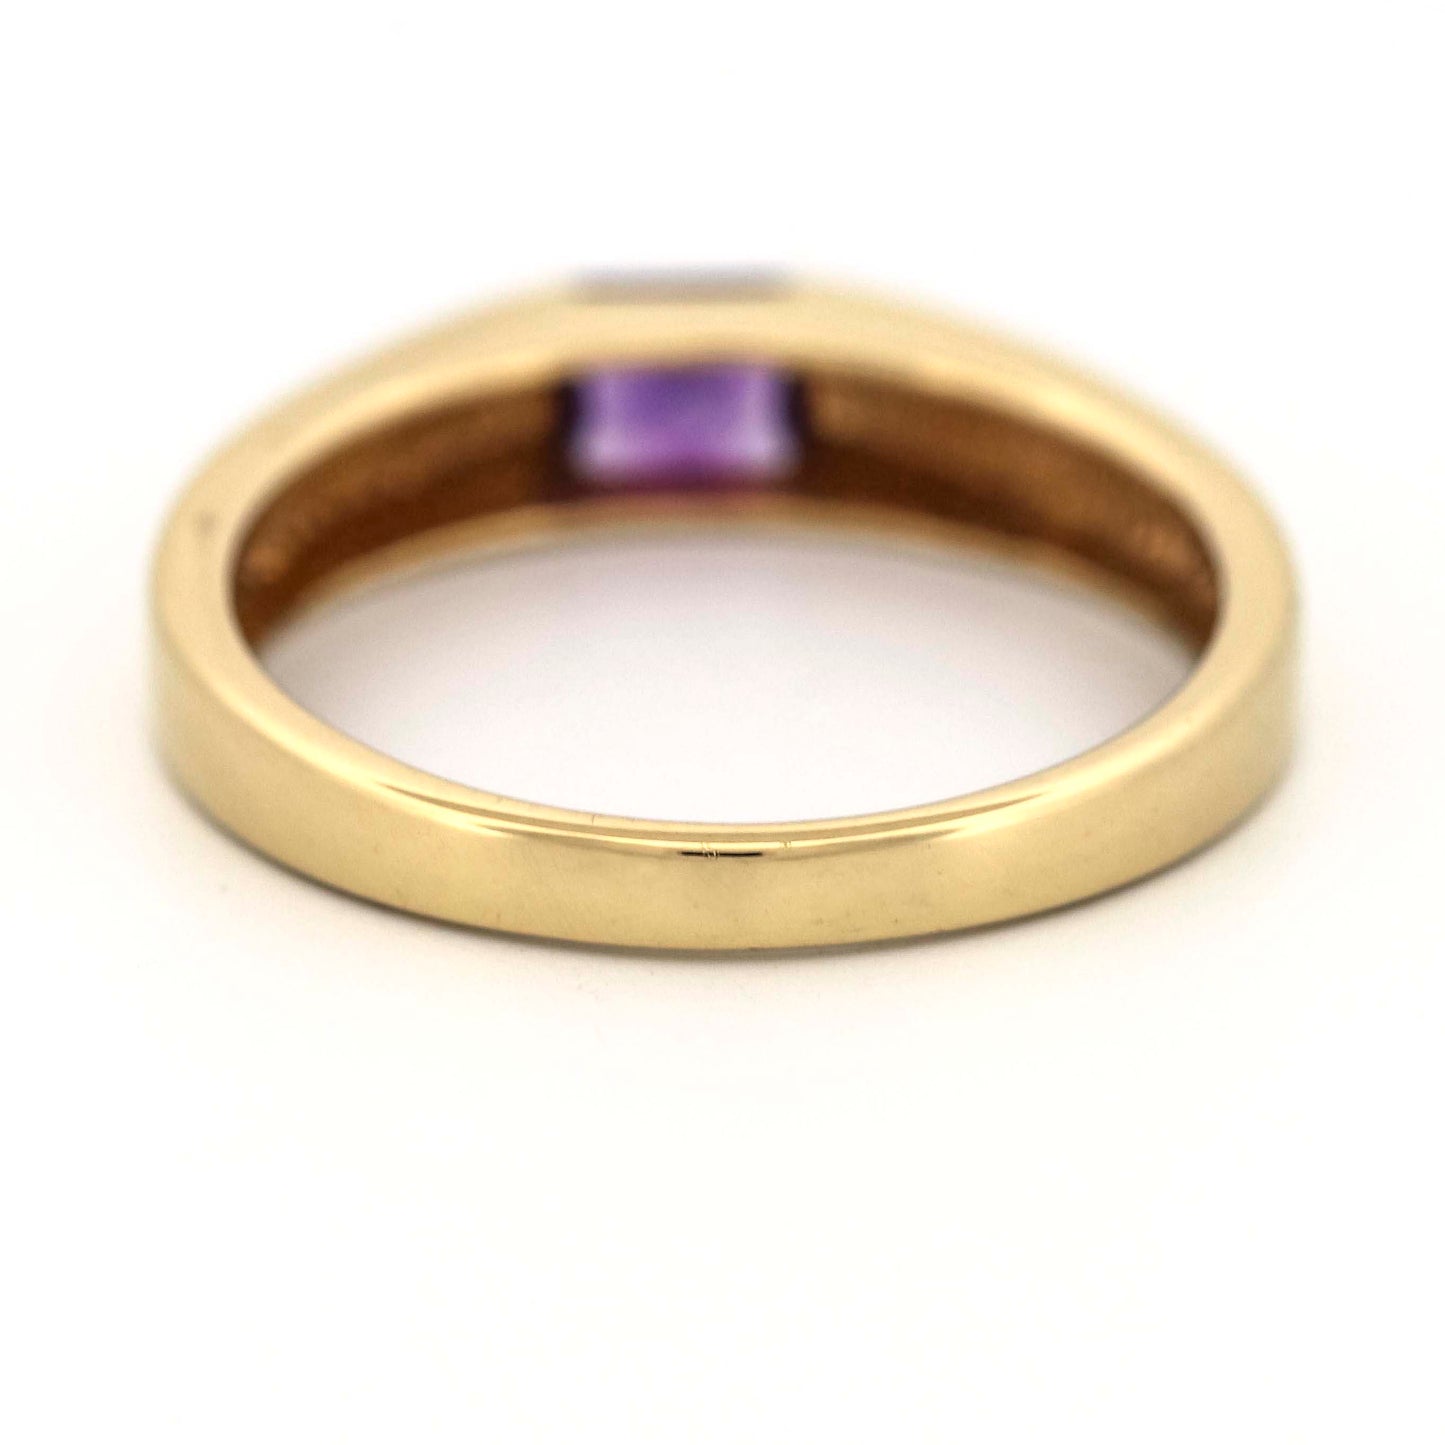 Vintage Style 18k Gold Amethyst Gemstone Ring - Size 7